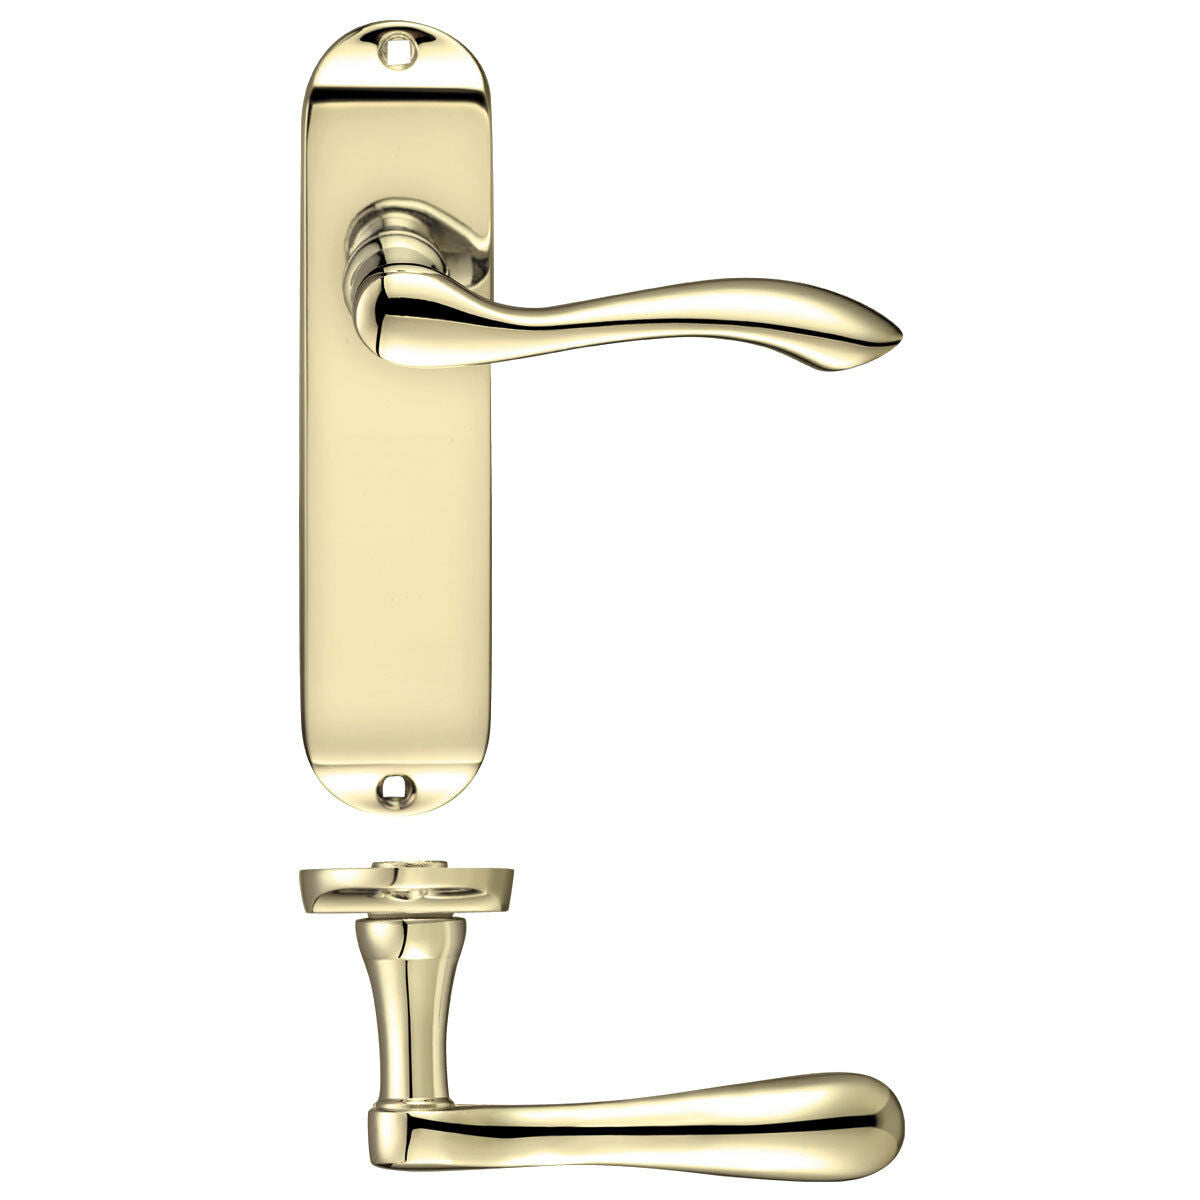 Arundel Door Handles - Latch, Lock & Bathroom Handle Sets Chrome & Brass Finish